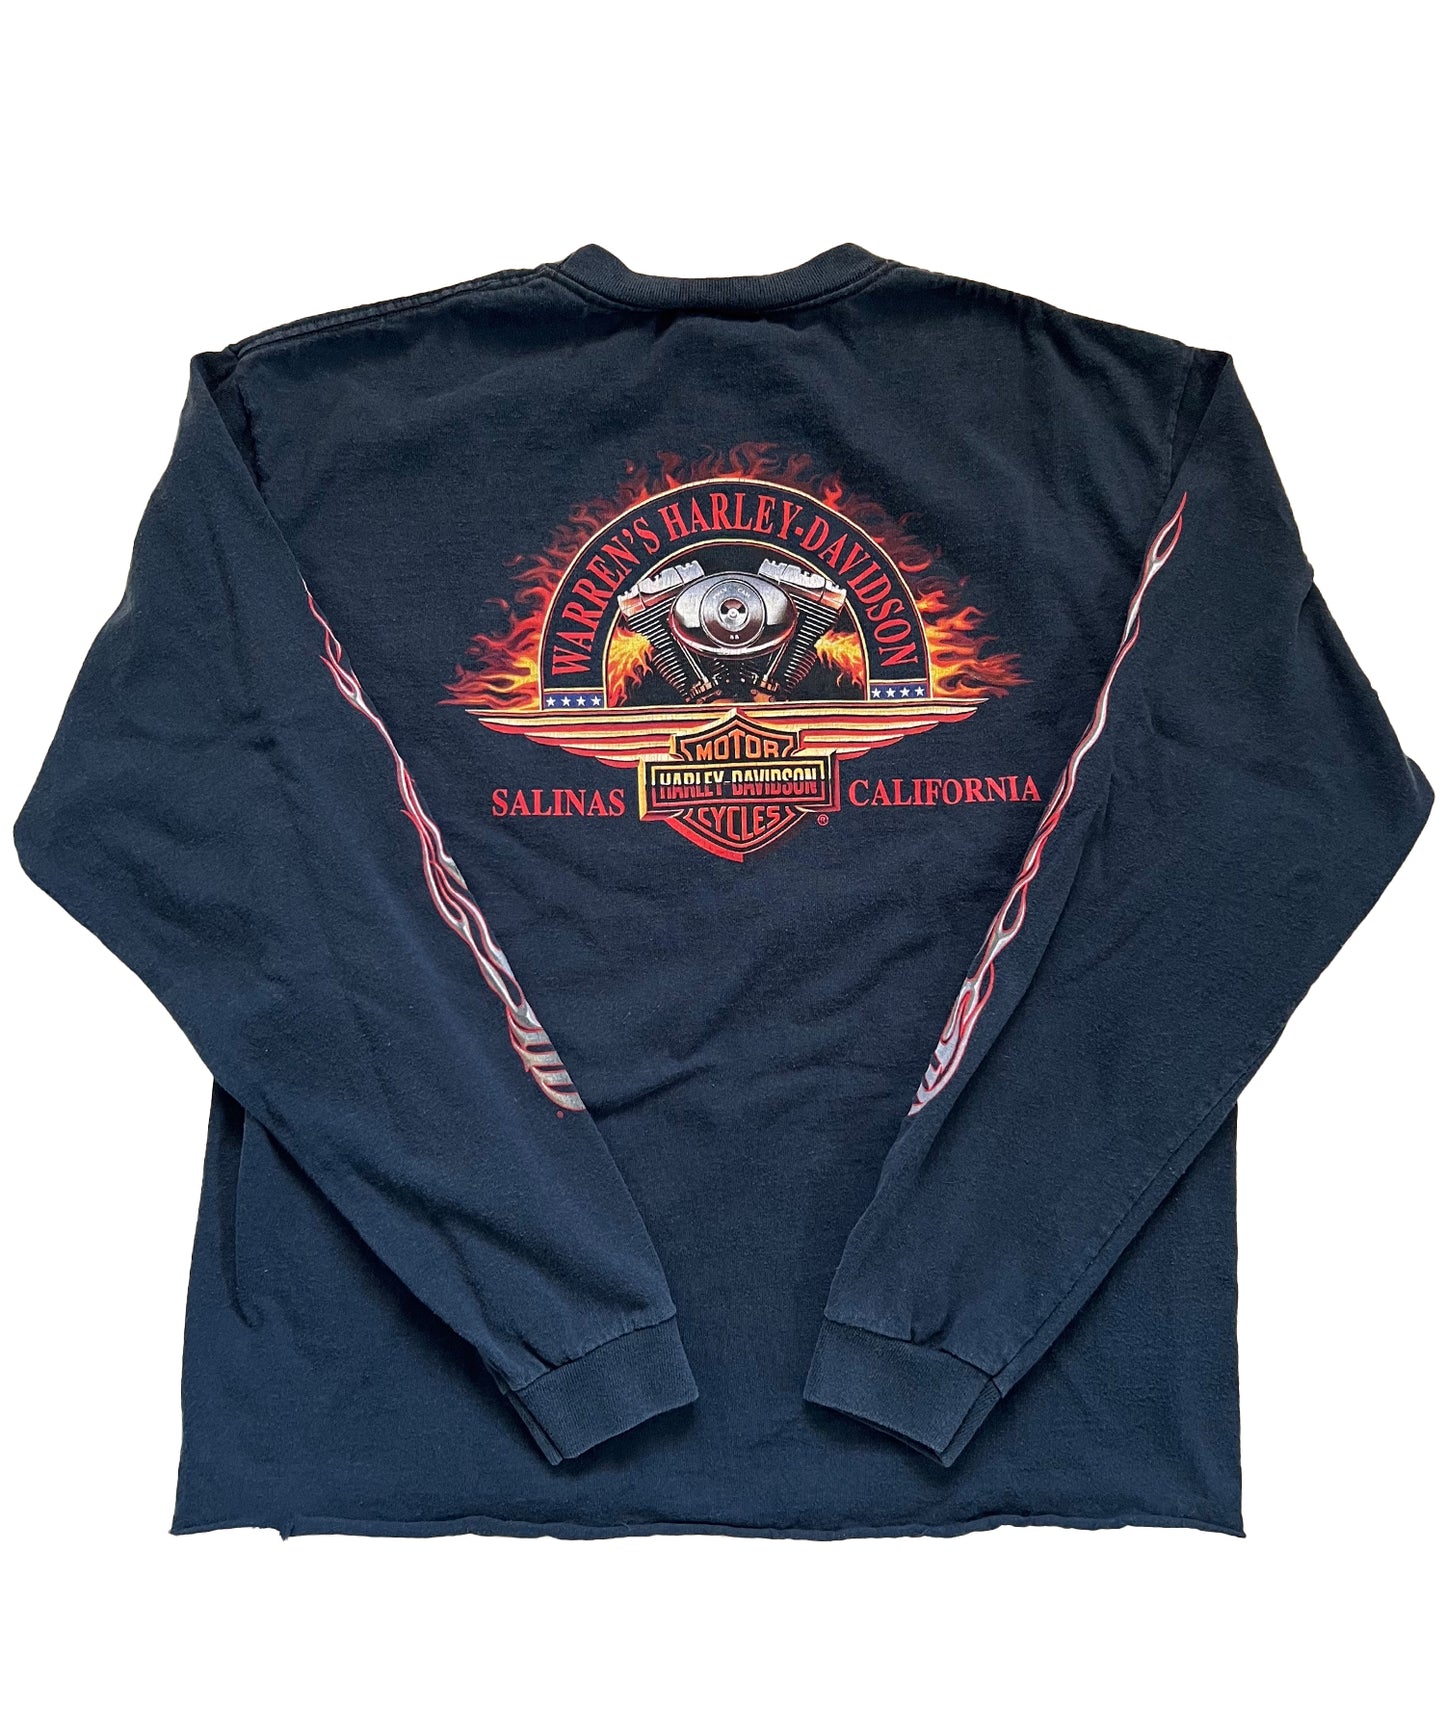 Harley Davidson Salinas California Long Sleeve Tee (X-Large)